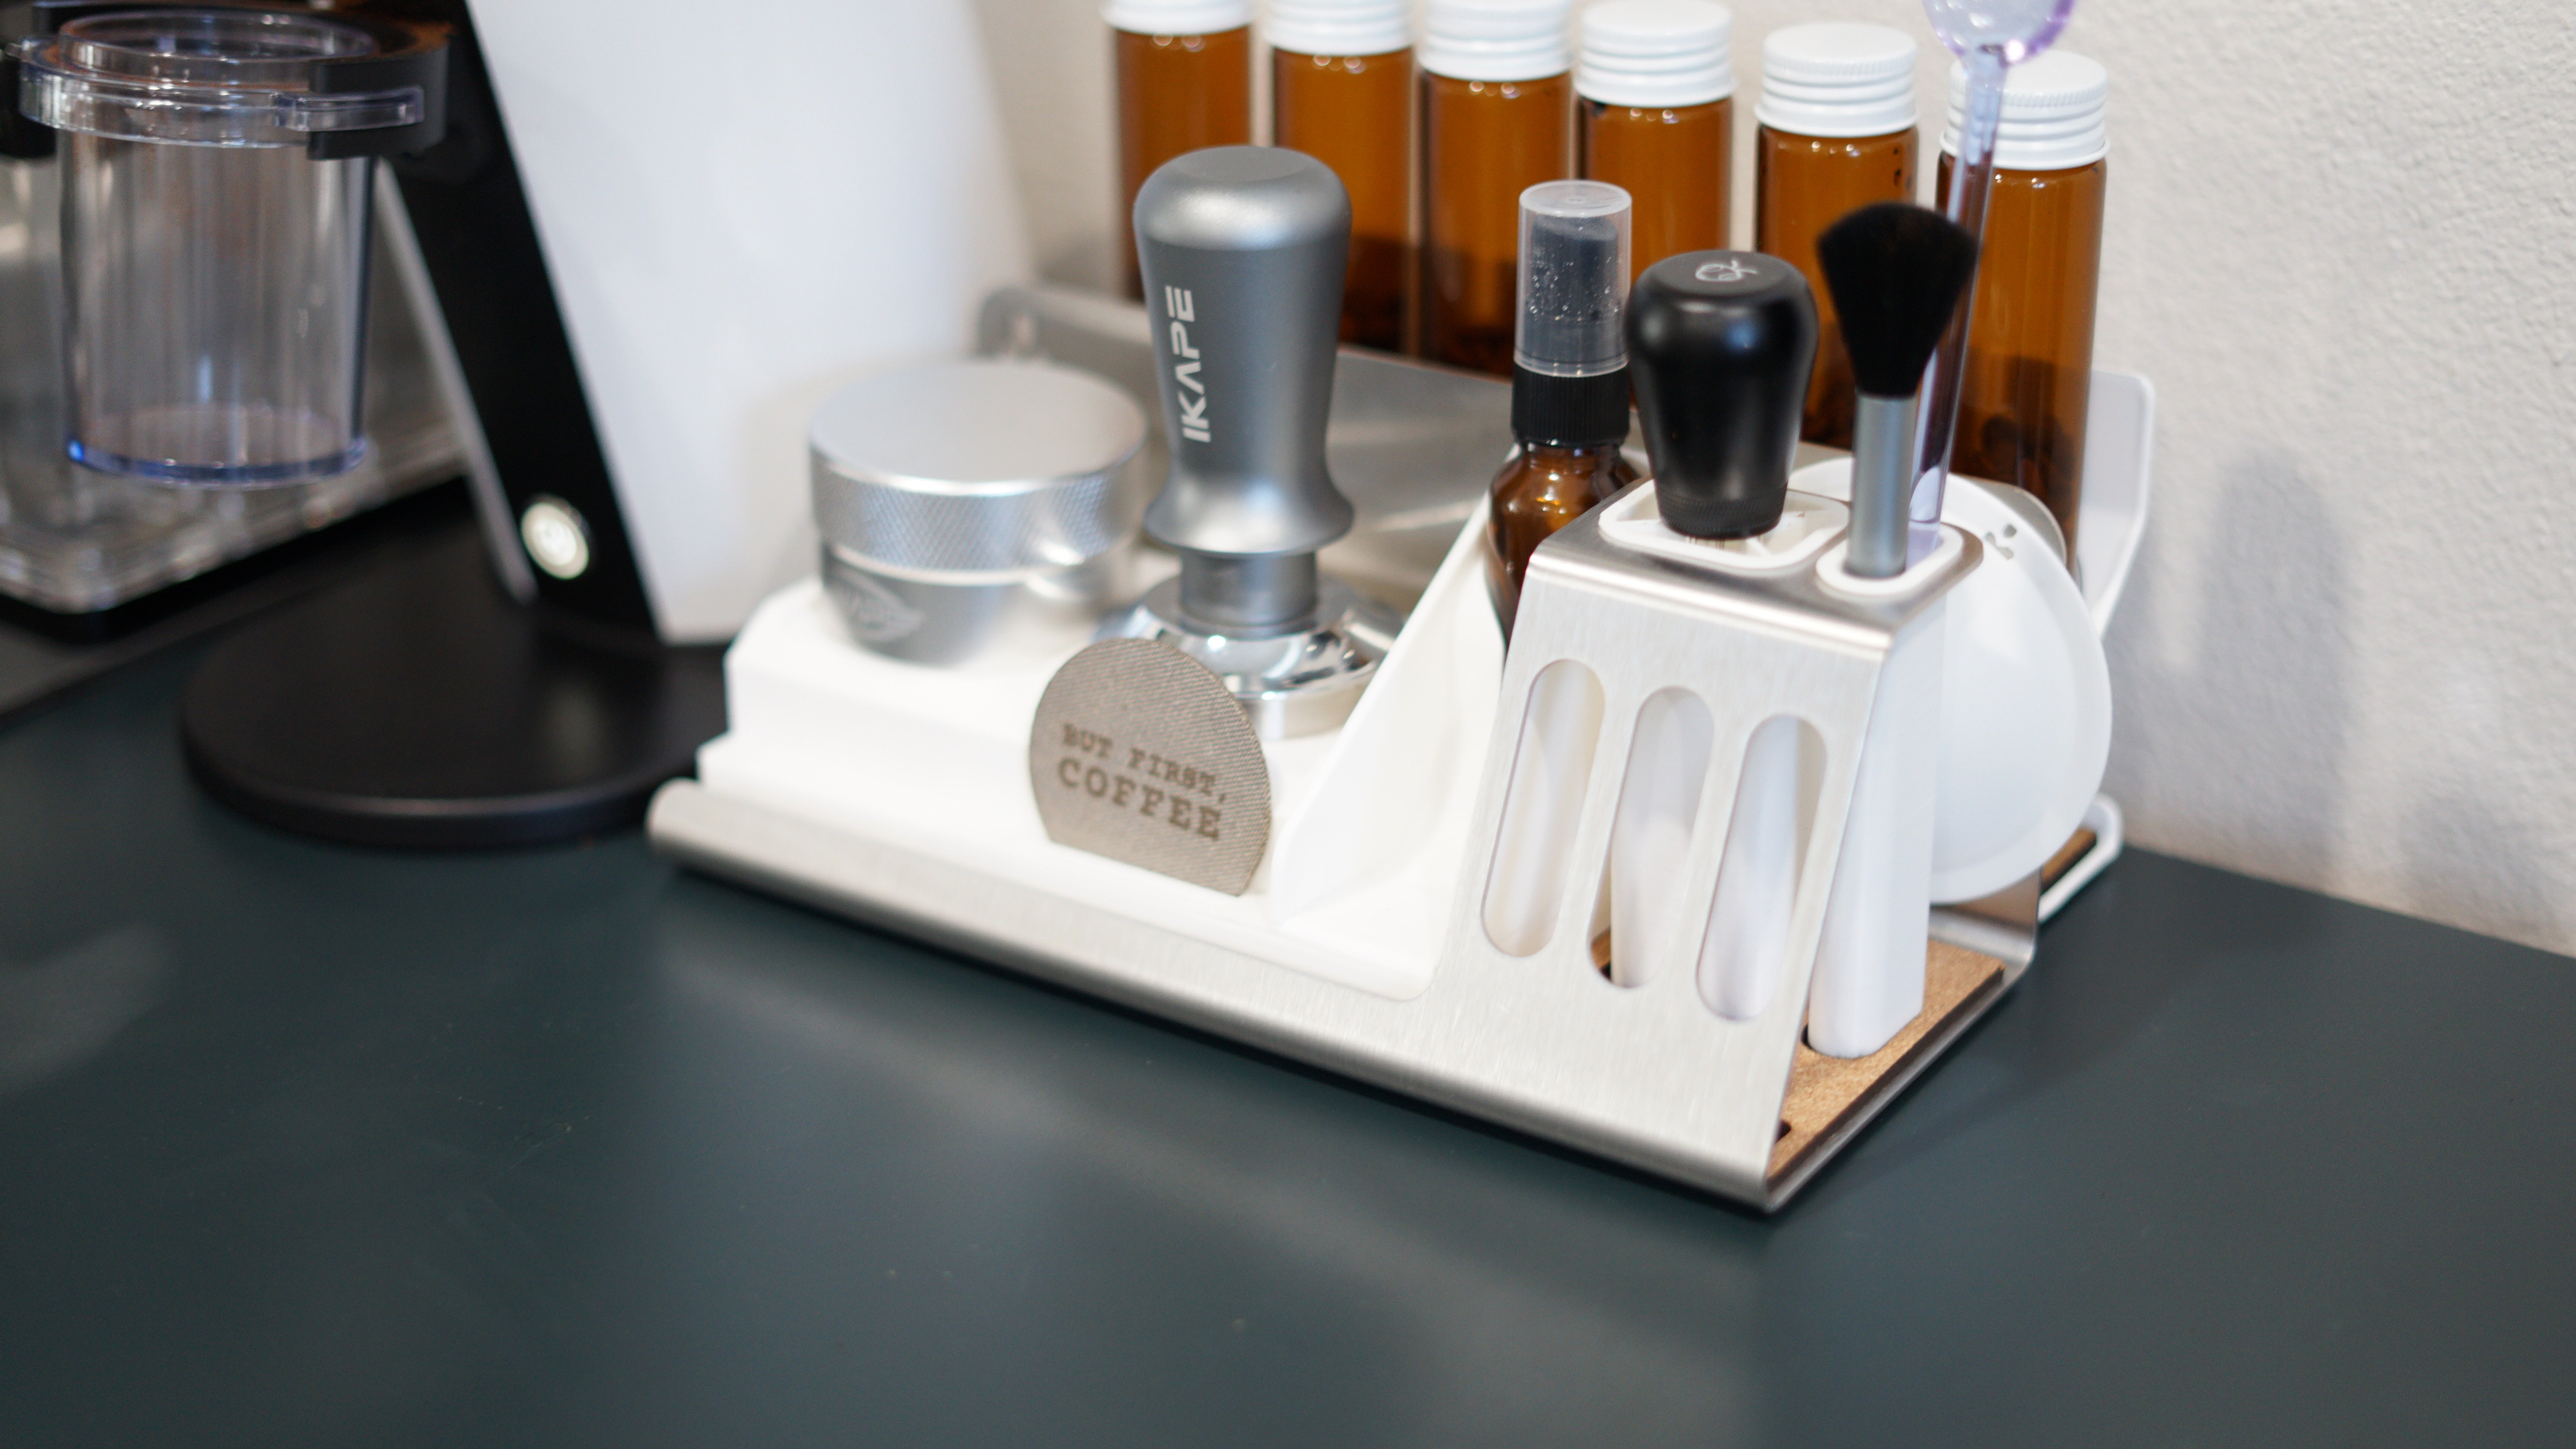 Espresso tool organizer and display stand